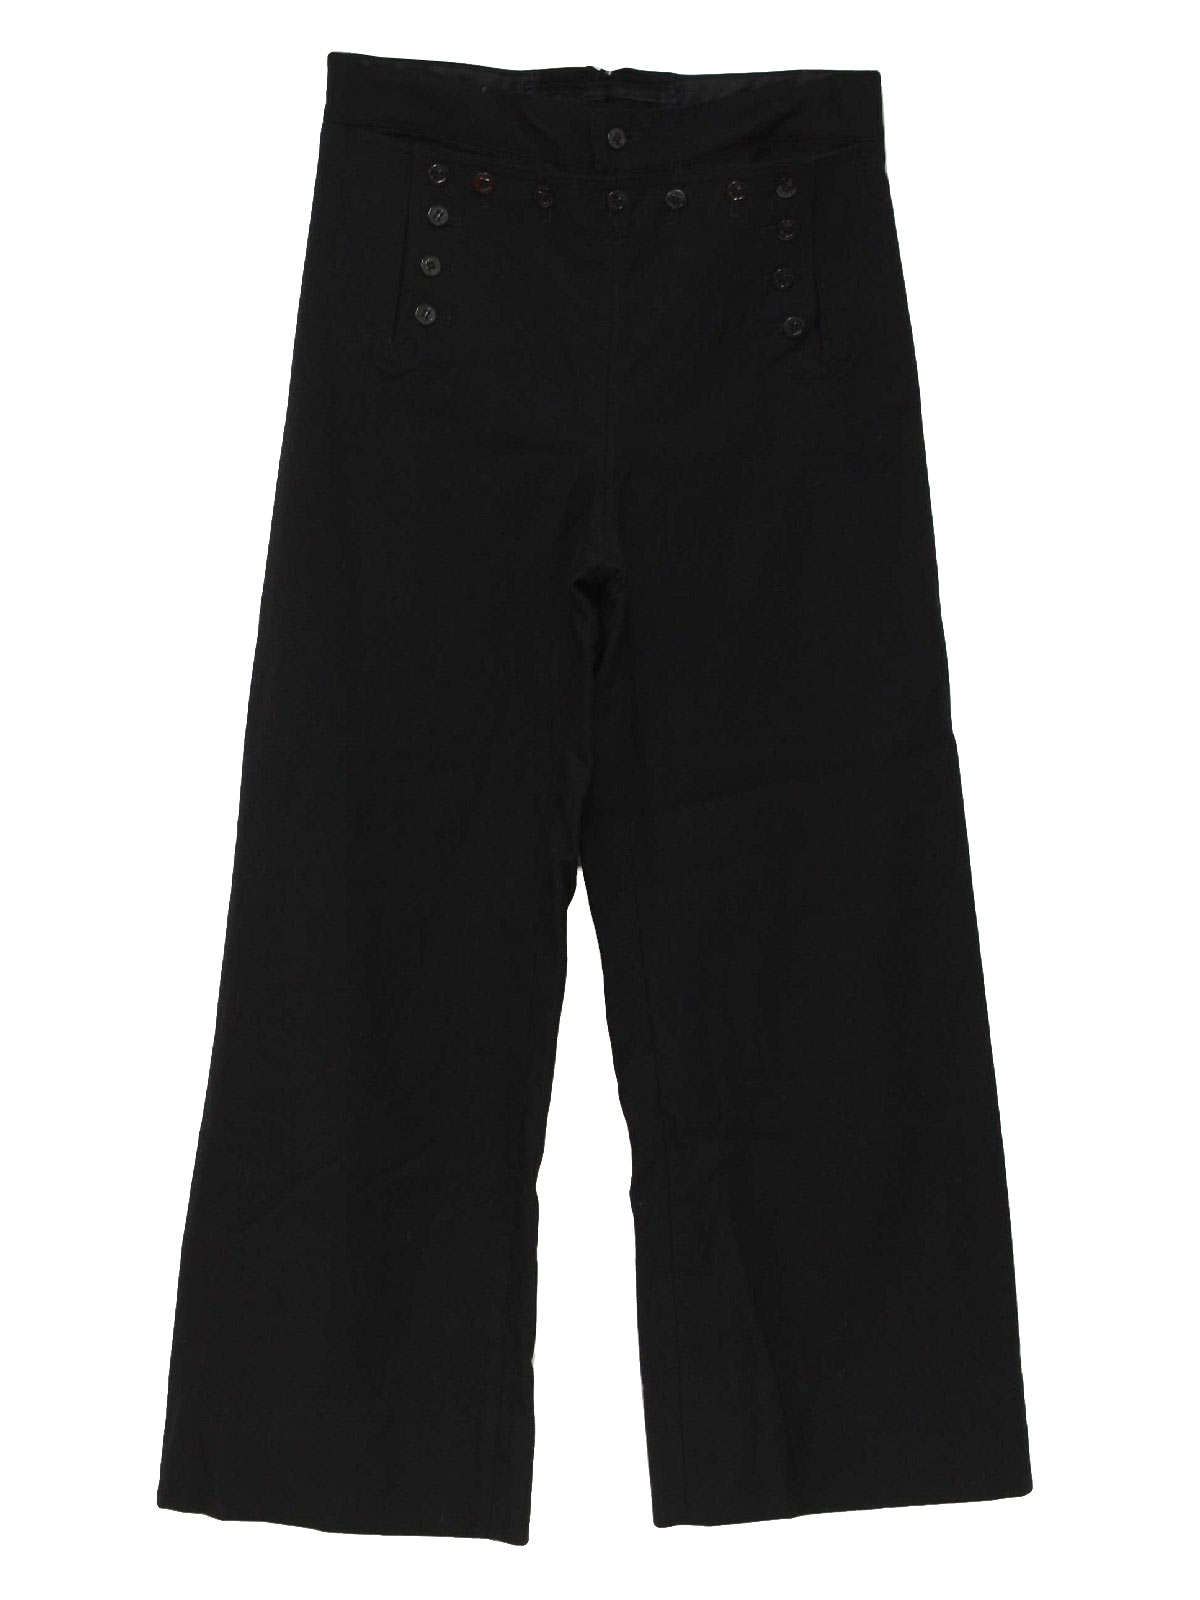 Vintage Statham 70's Bellbottom Pants: 70s -Statham- Mens blue-black ...